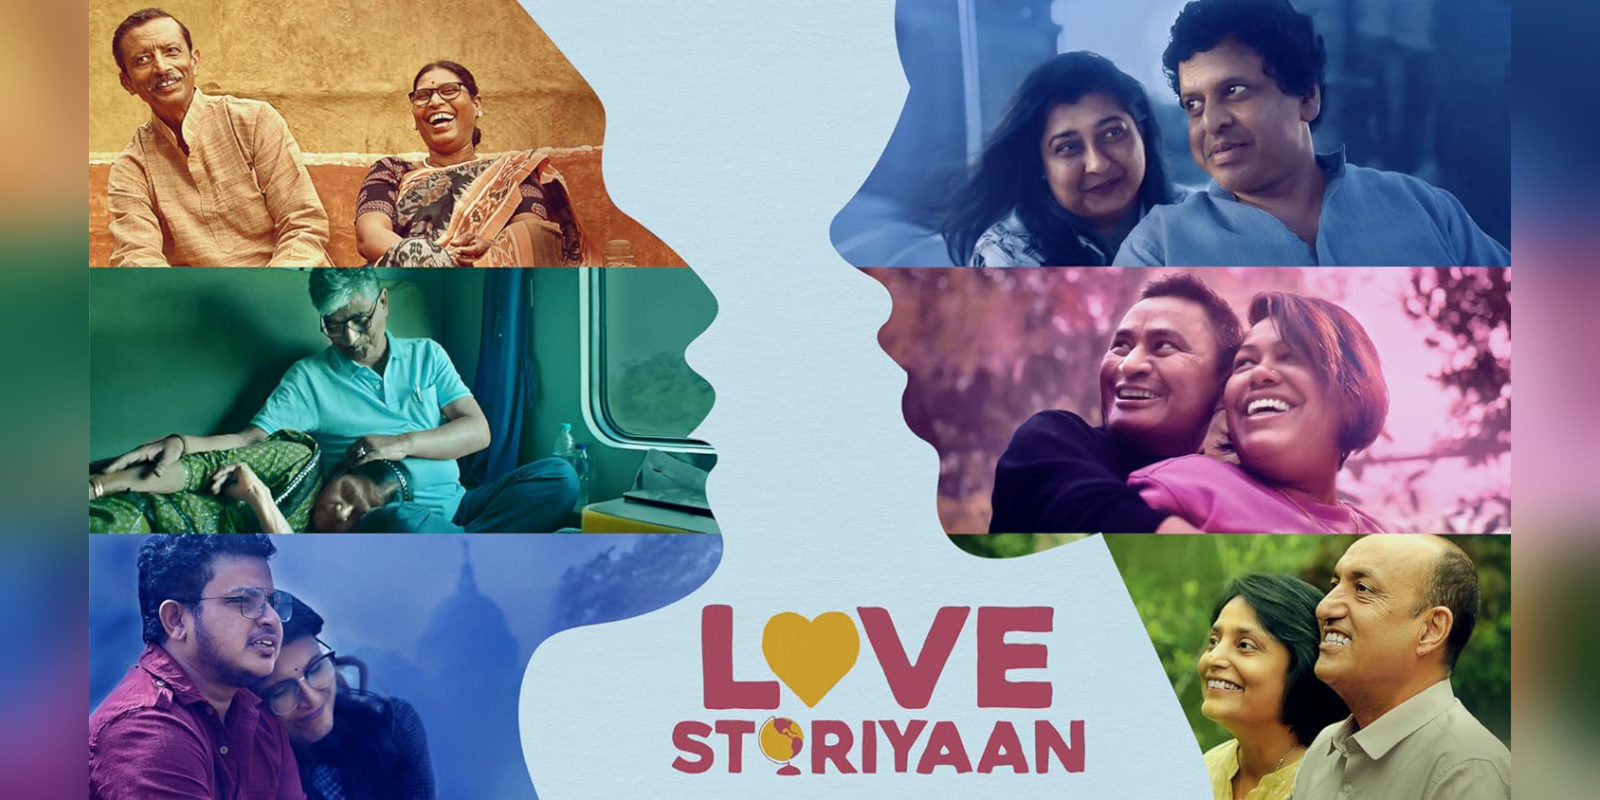 Love Storiyaan (docu-series) review: Heart-warming tales of love